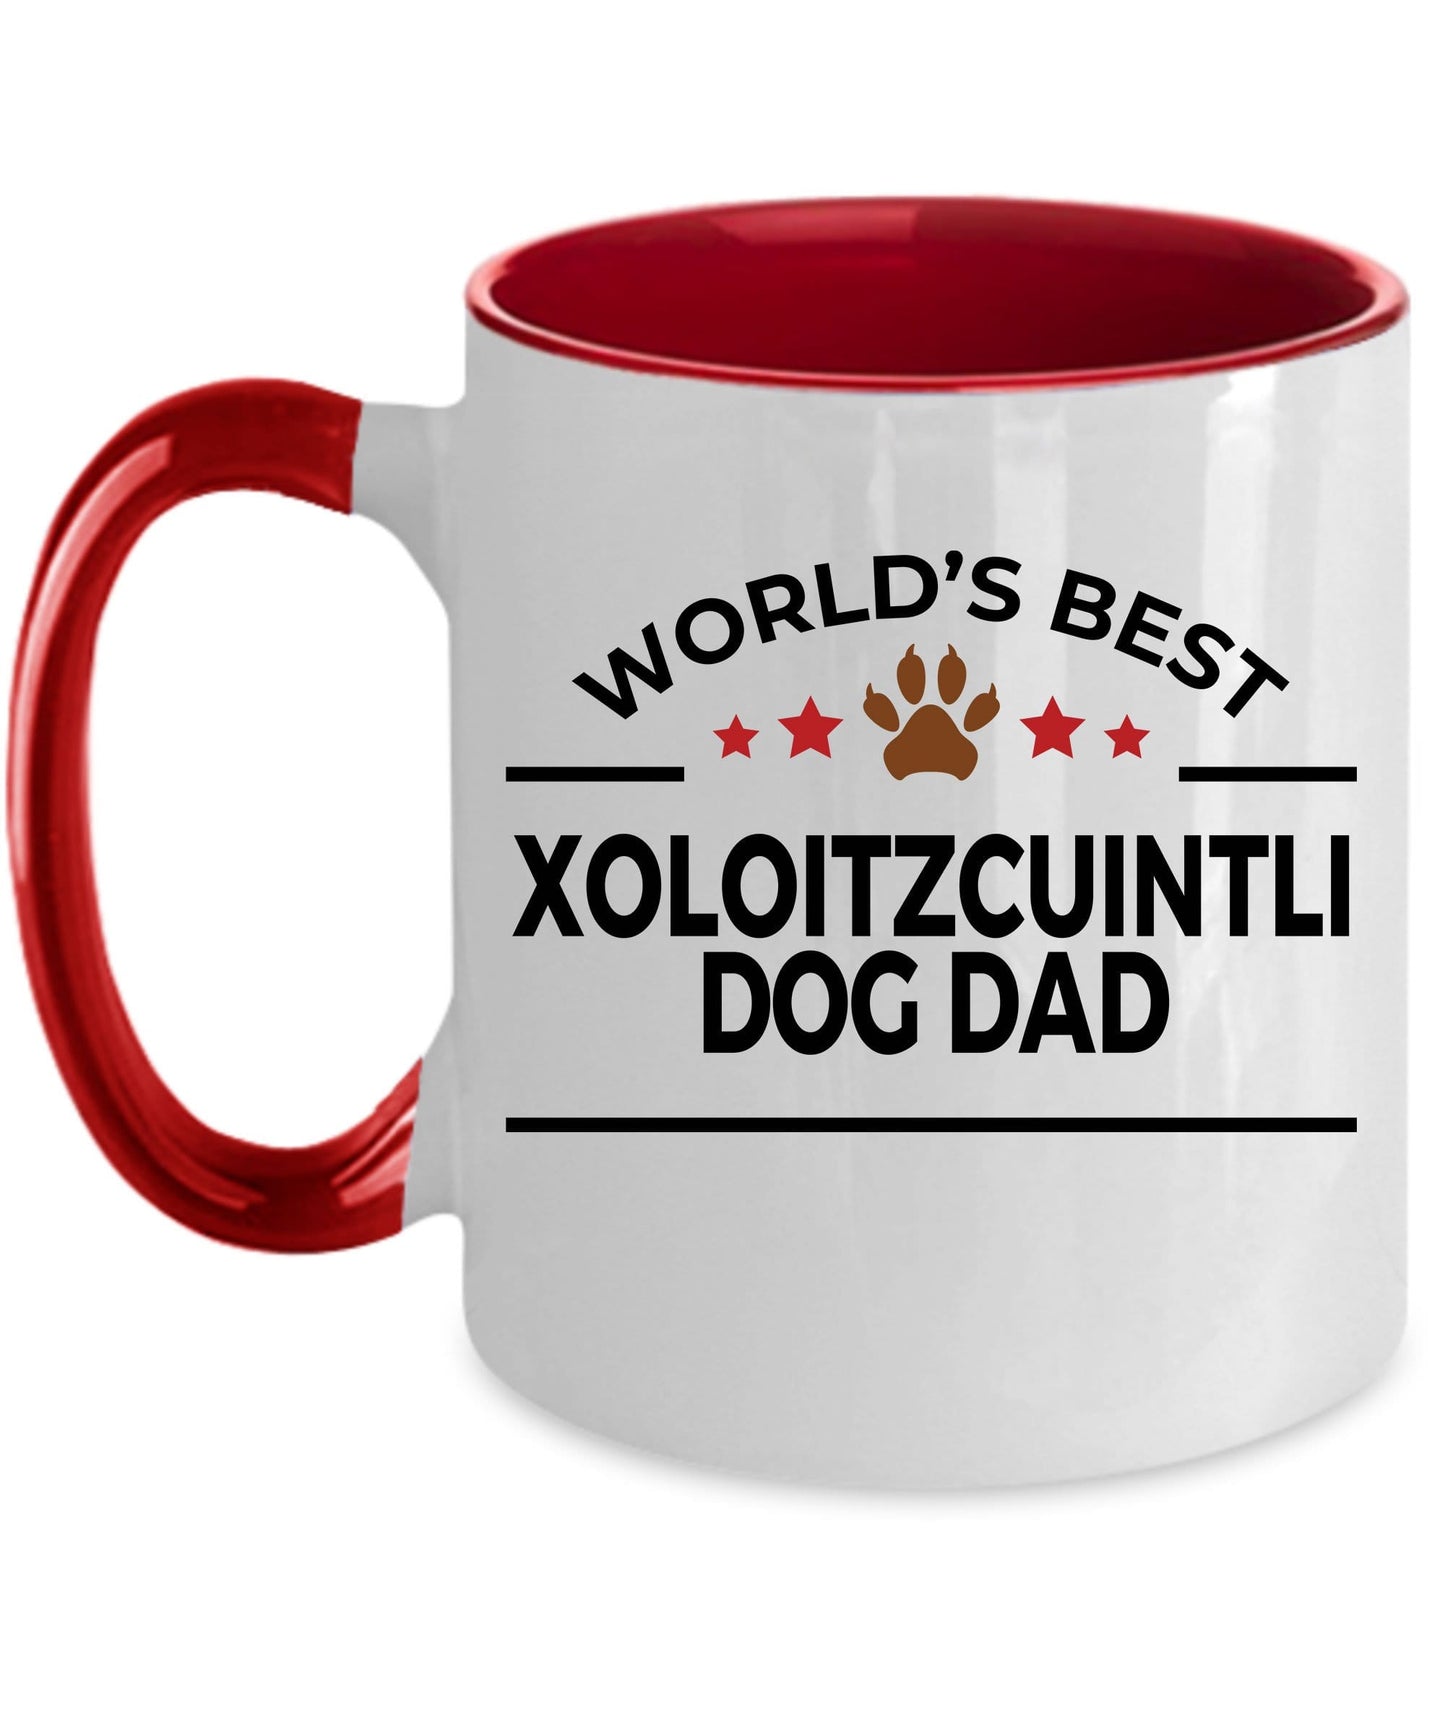 Xoloitzcuintli Best Dog Dad Ceramic Coffee Mug